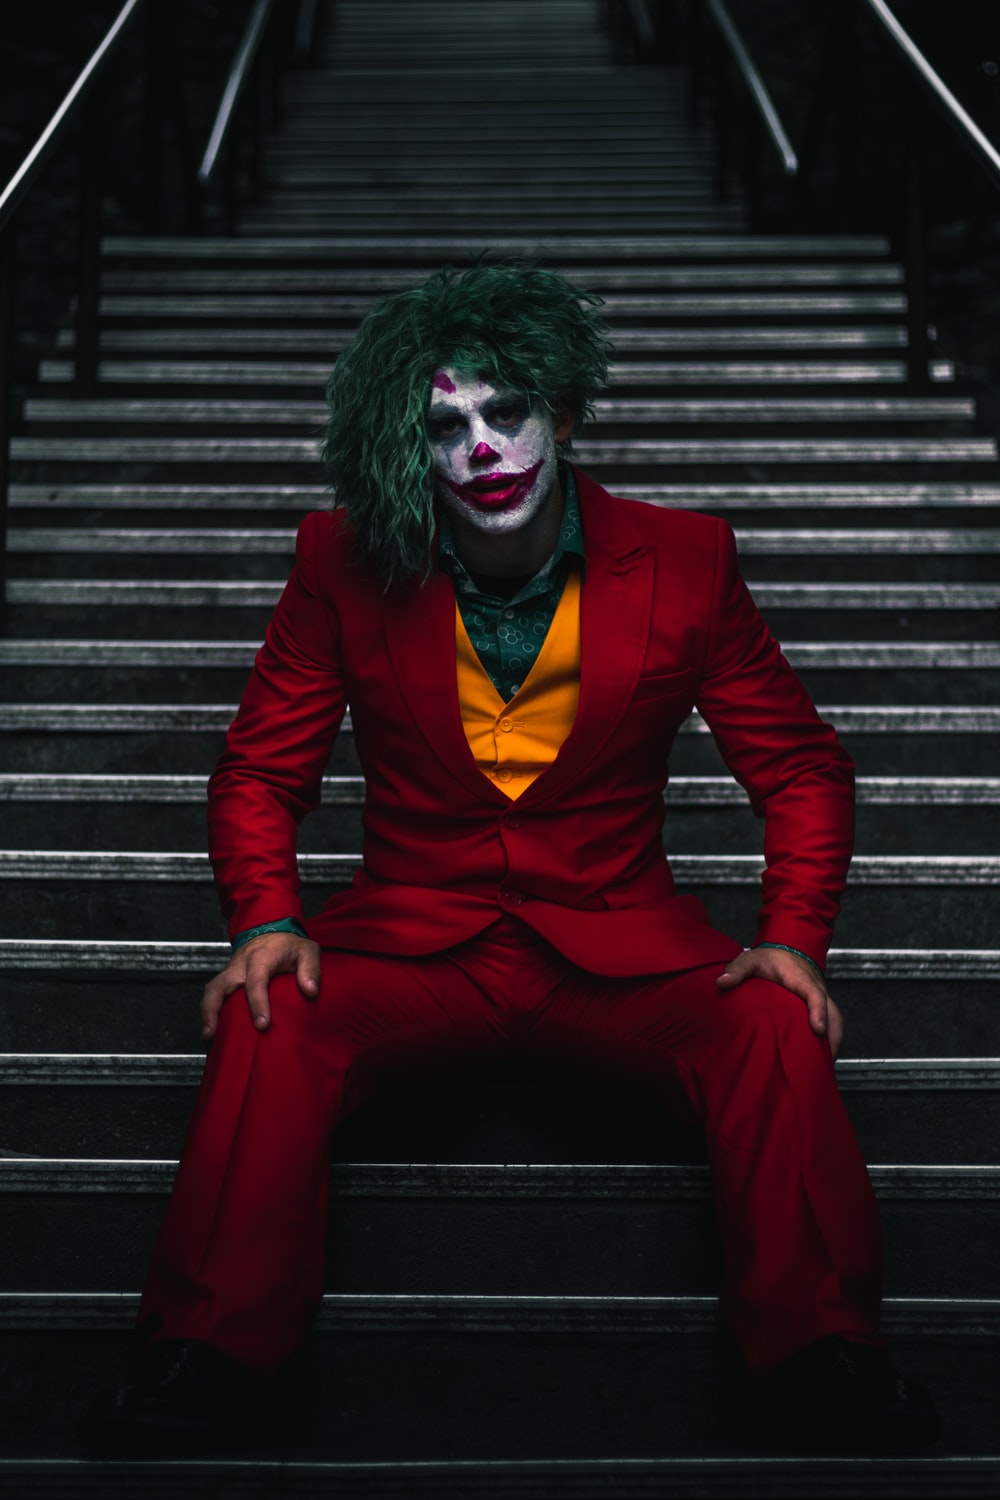 Joker Image. Download Free Picture